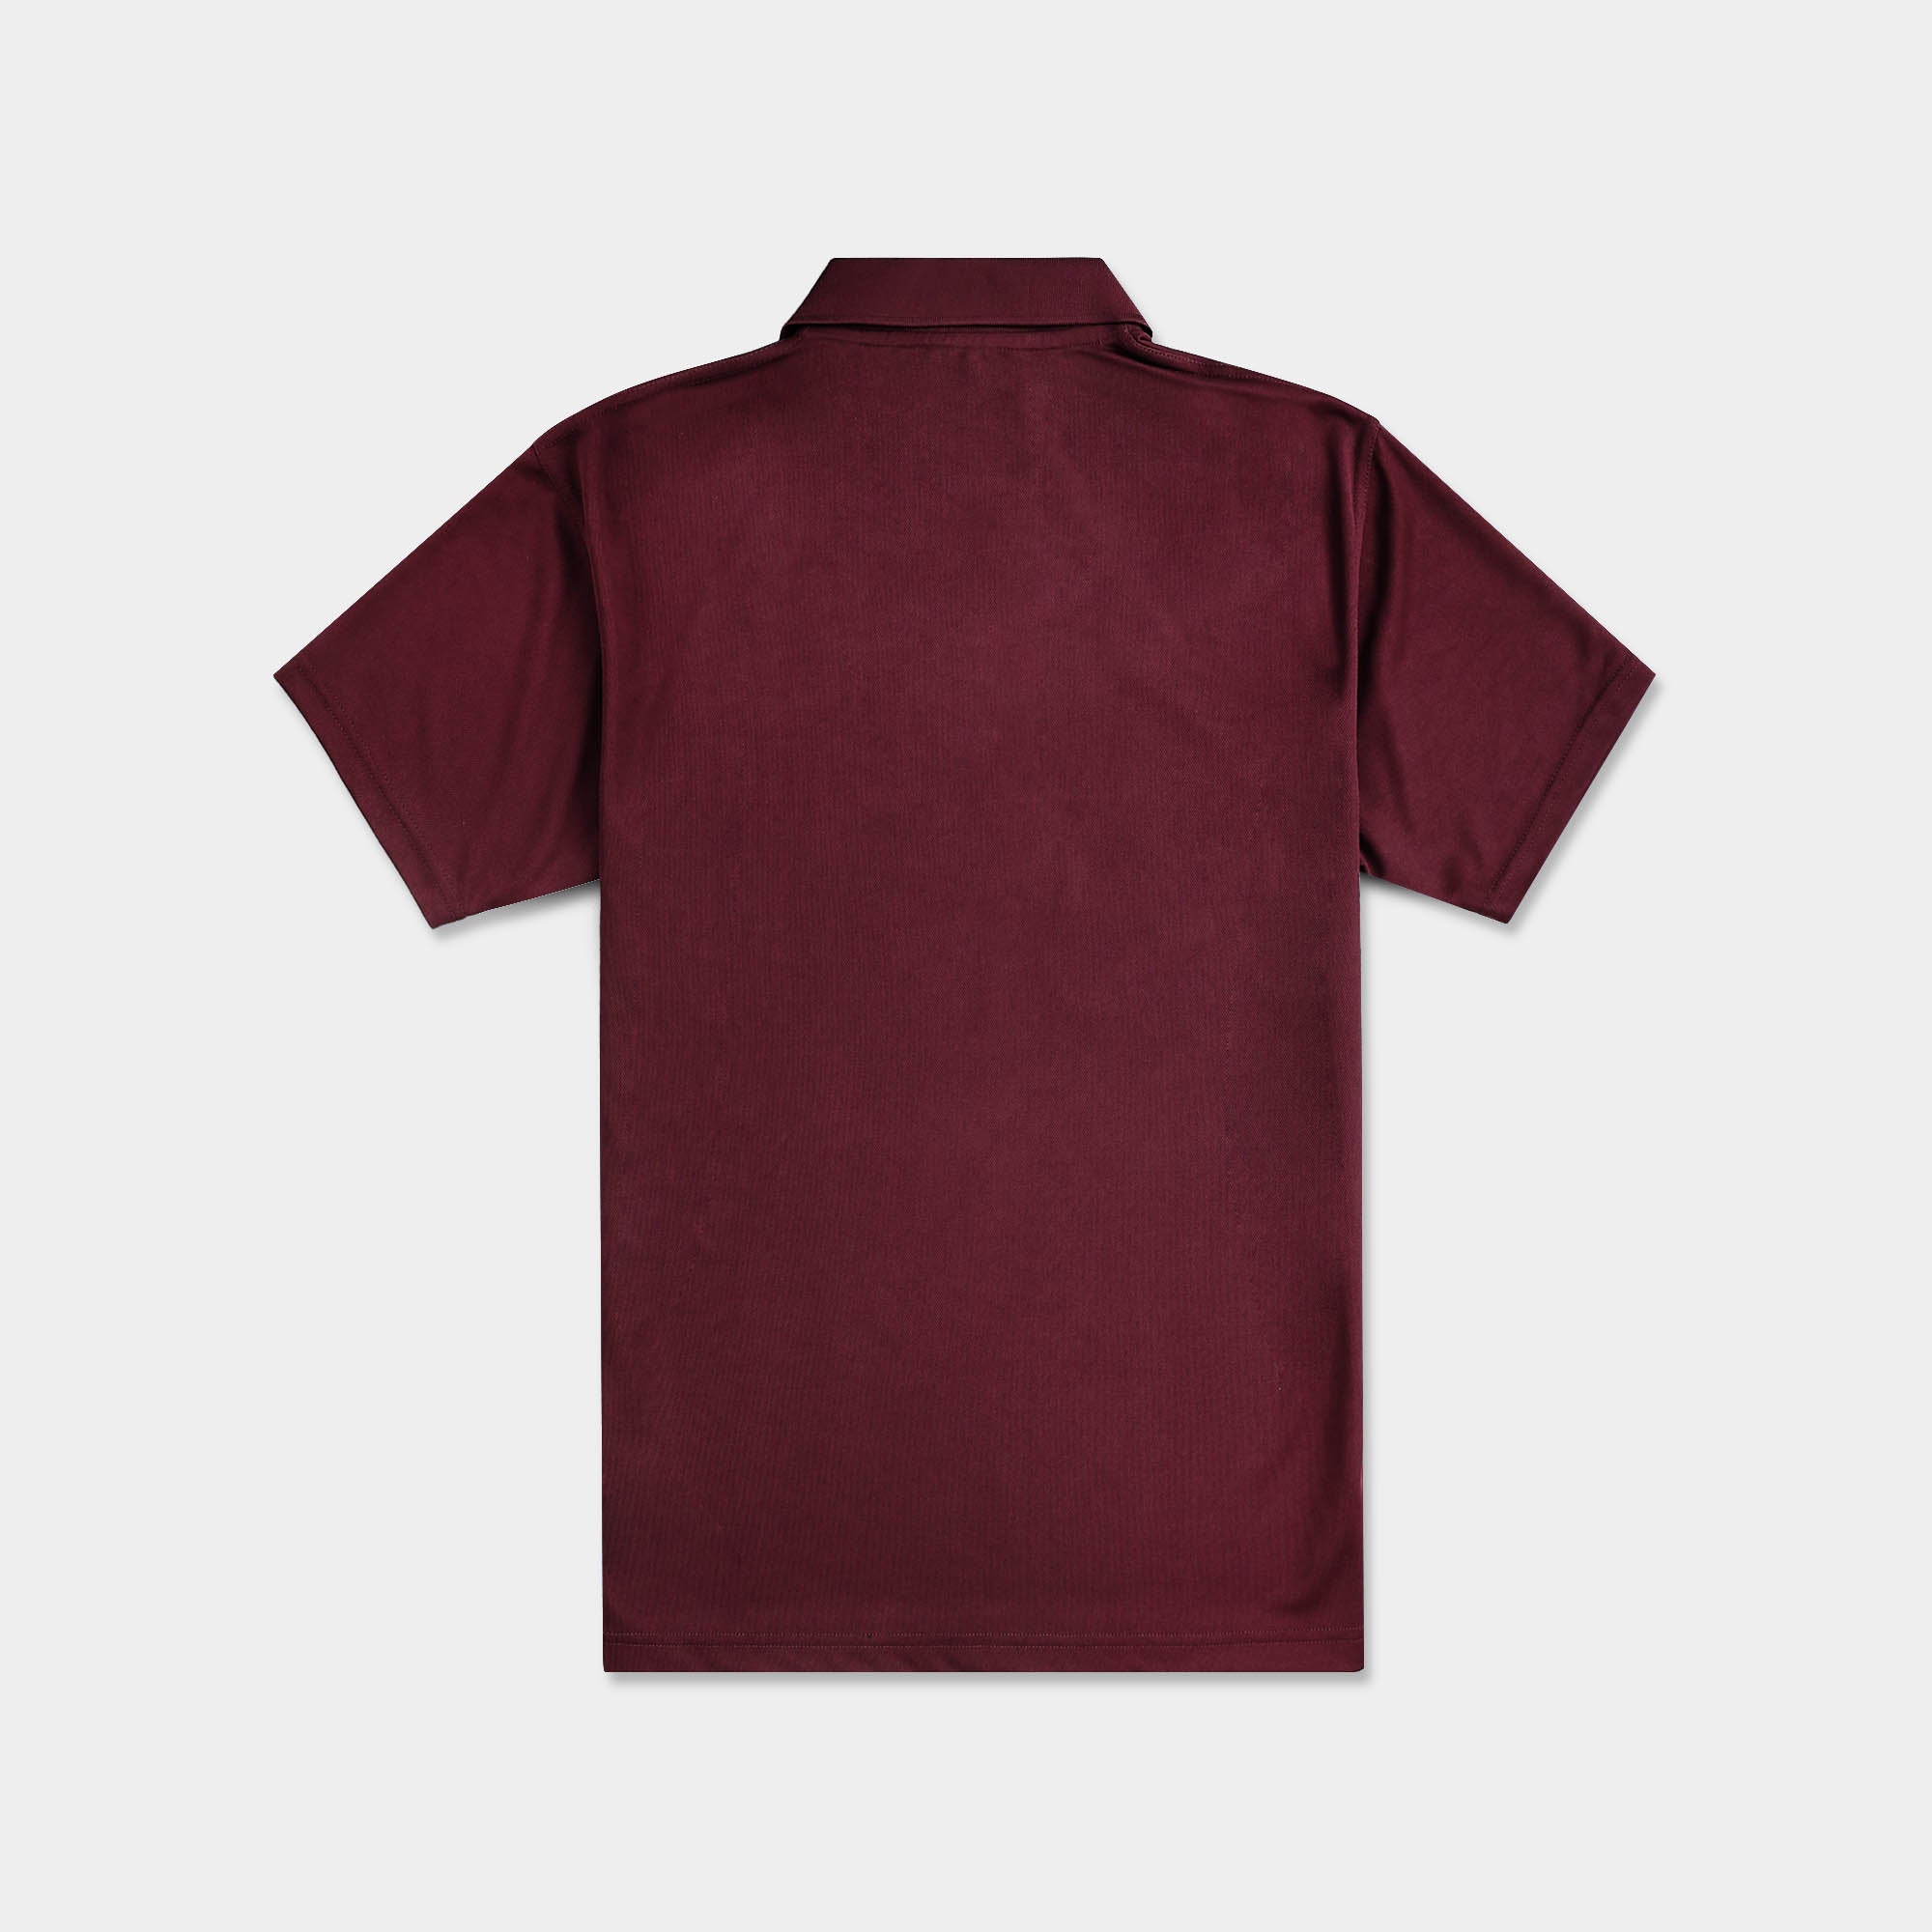 mens polo shirts_sports polos_golf polo_polo t shirts for men_custom polo shirts_cheap polo shirts_polo shirts on sale_designer polo shirts_Burgundy